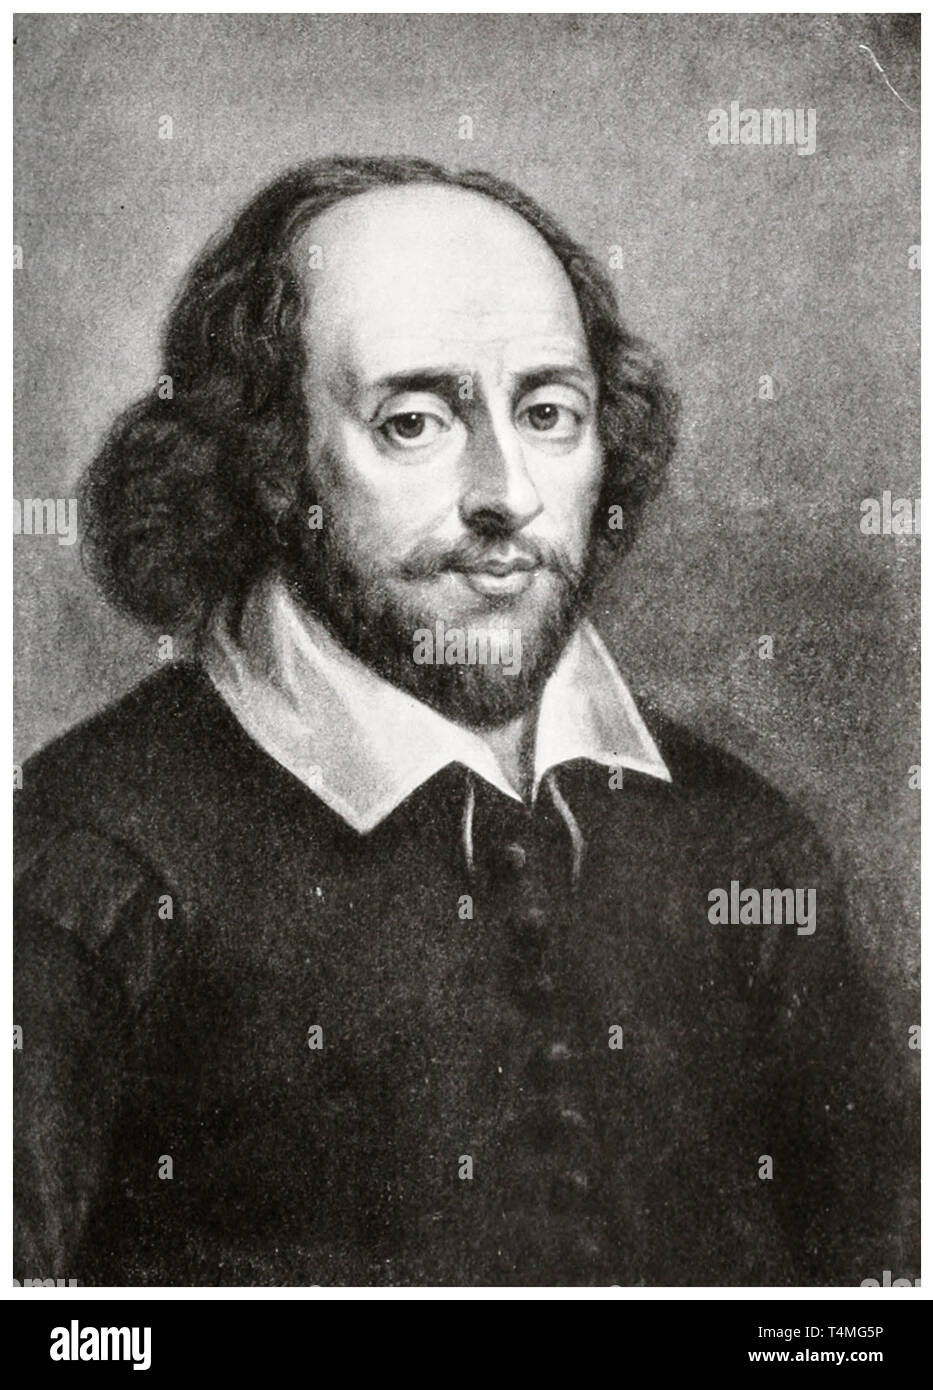 William Shakespeare (1564-1616), gravure portrait, 1908 Banque D'Images